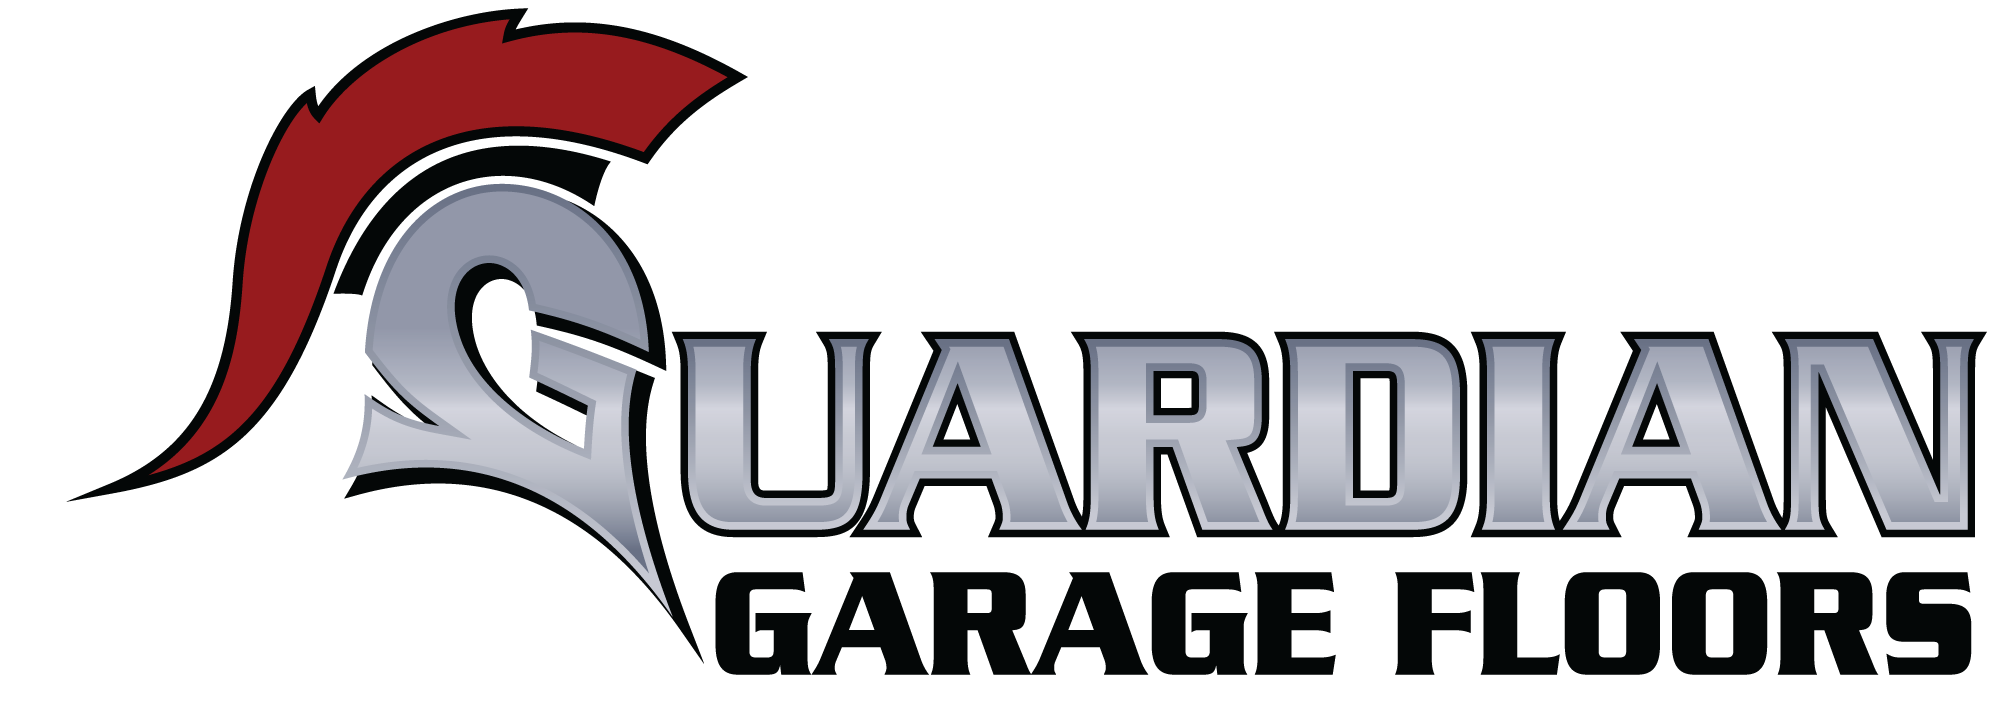 Guardian Garage Floors Logo